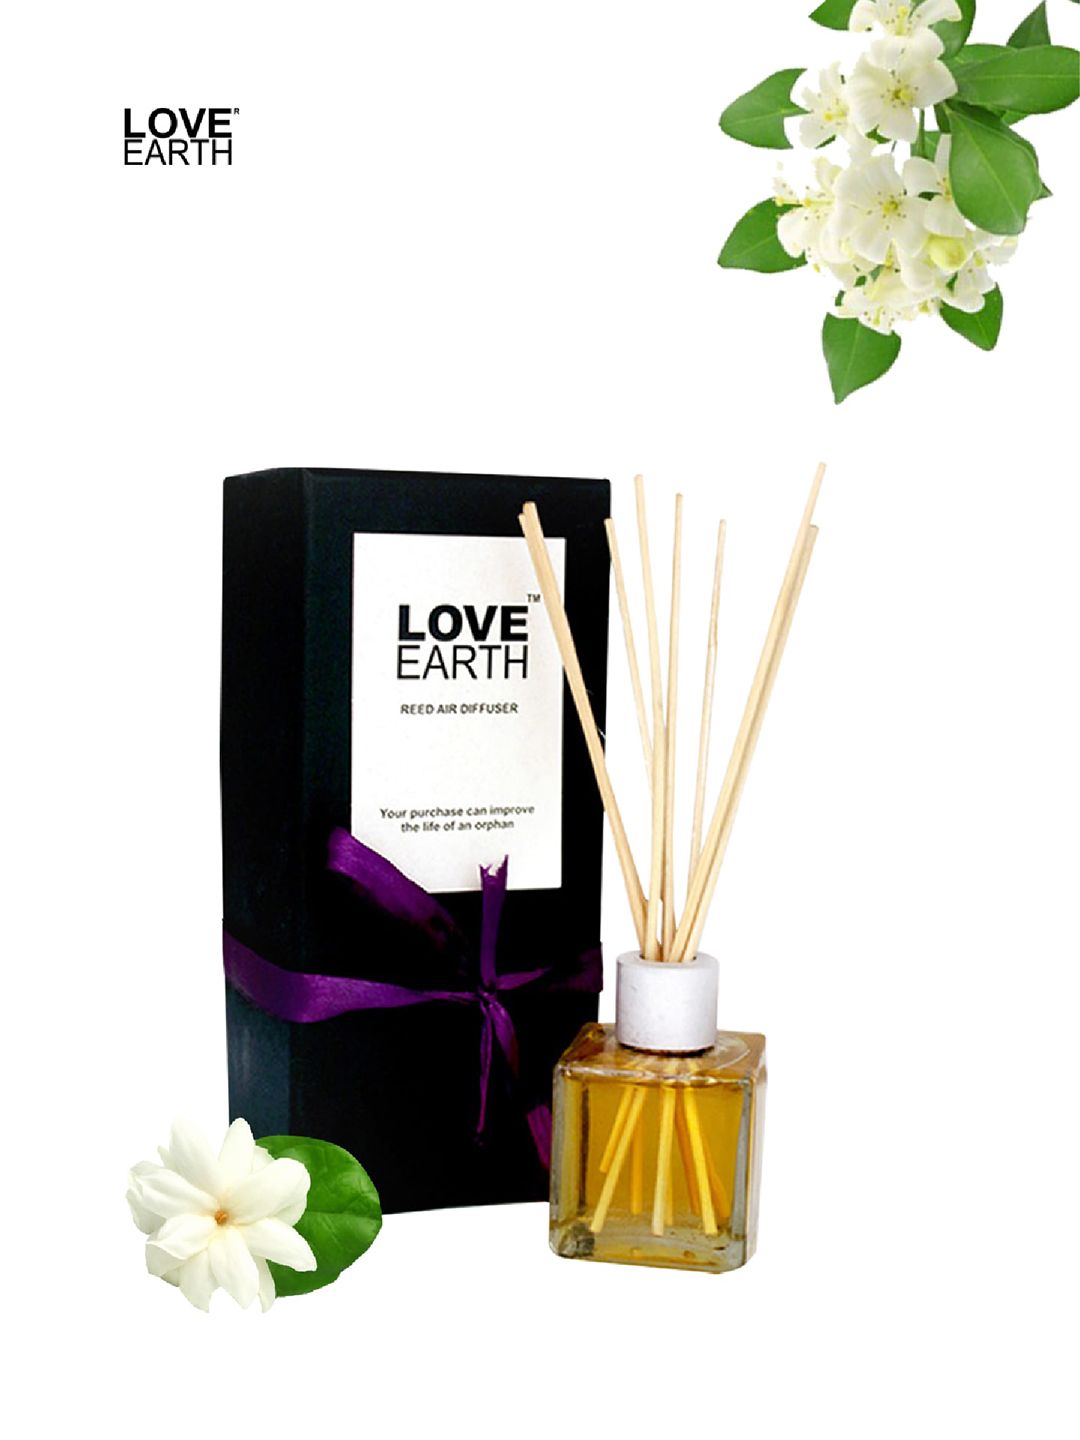 LOVE EARTH Mogra Essential Oil Reed Aroma Oil Diffuser Price in India